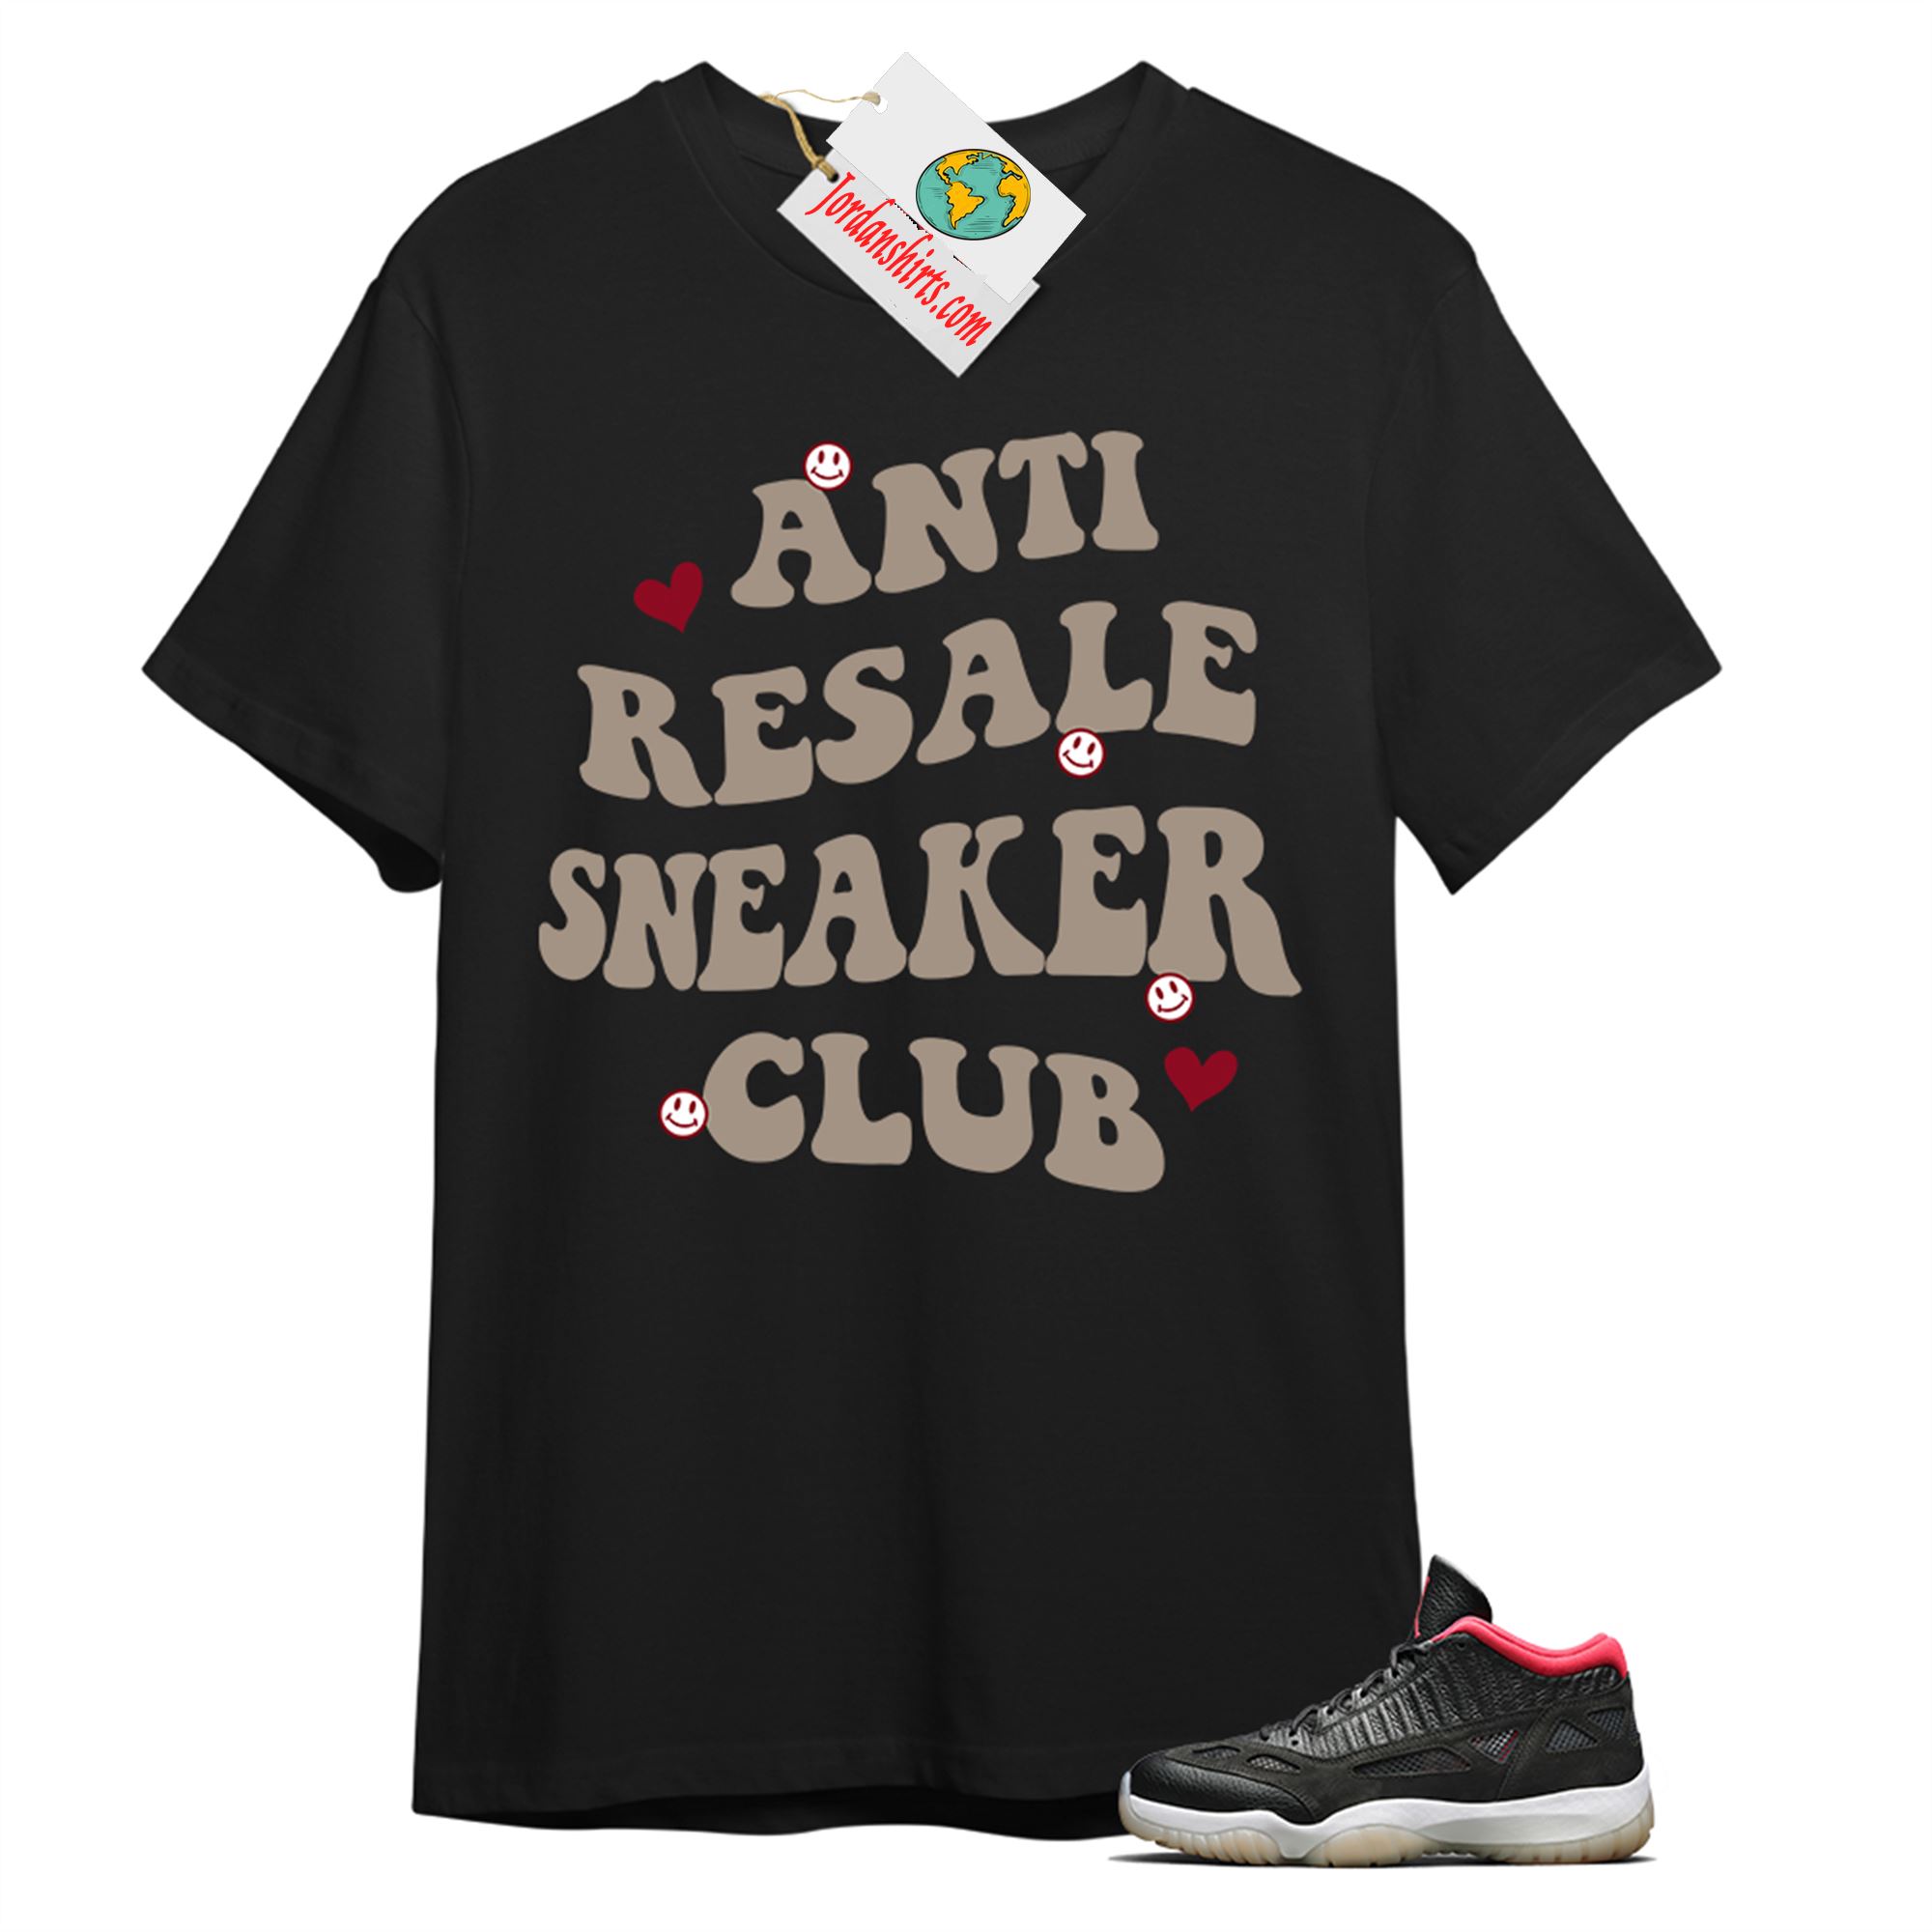 Jordan 11 Shirt, Anti Resale Sneaker Club Black T-shirt Air Jordan 11 Bred 11s Full Size Up To 5xl